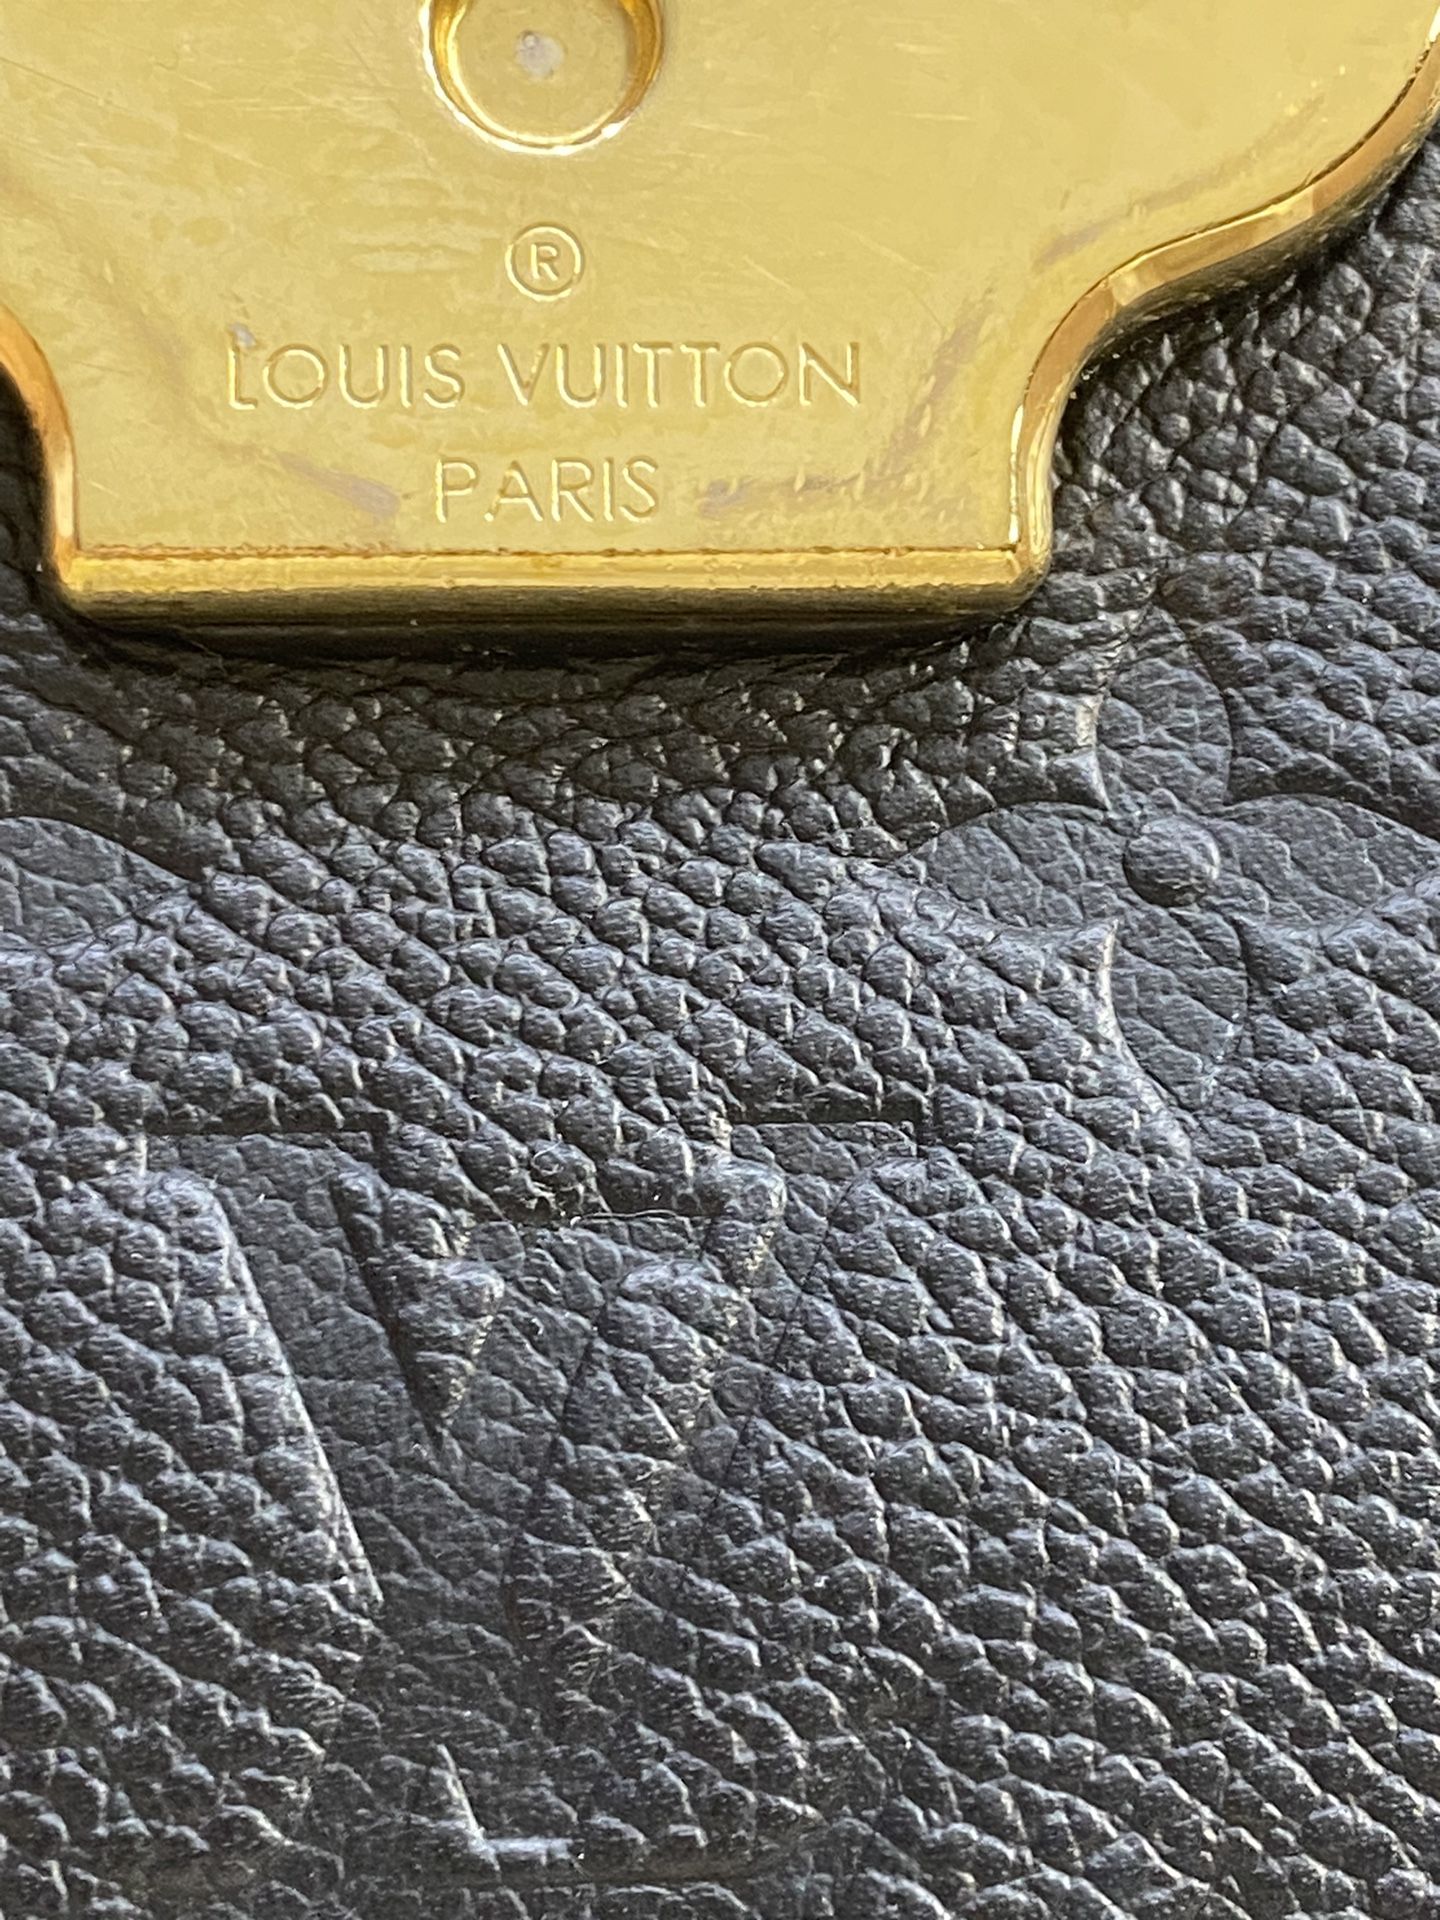 Louis Vuitton Kingston Bowling Bag for Sale in Houston, TX - OfferUp